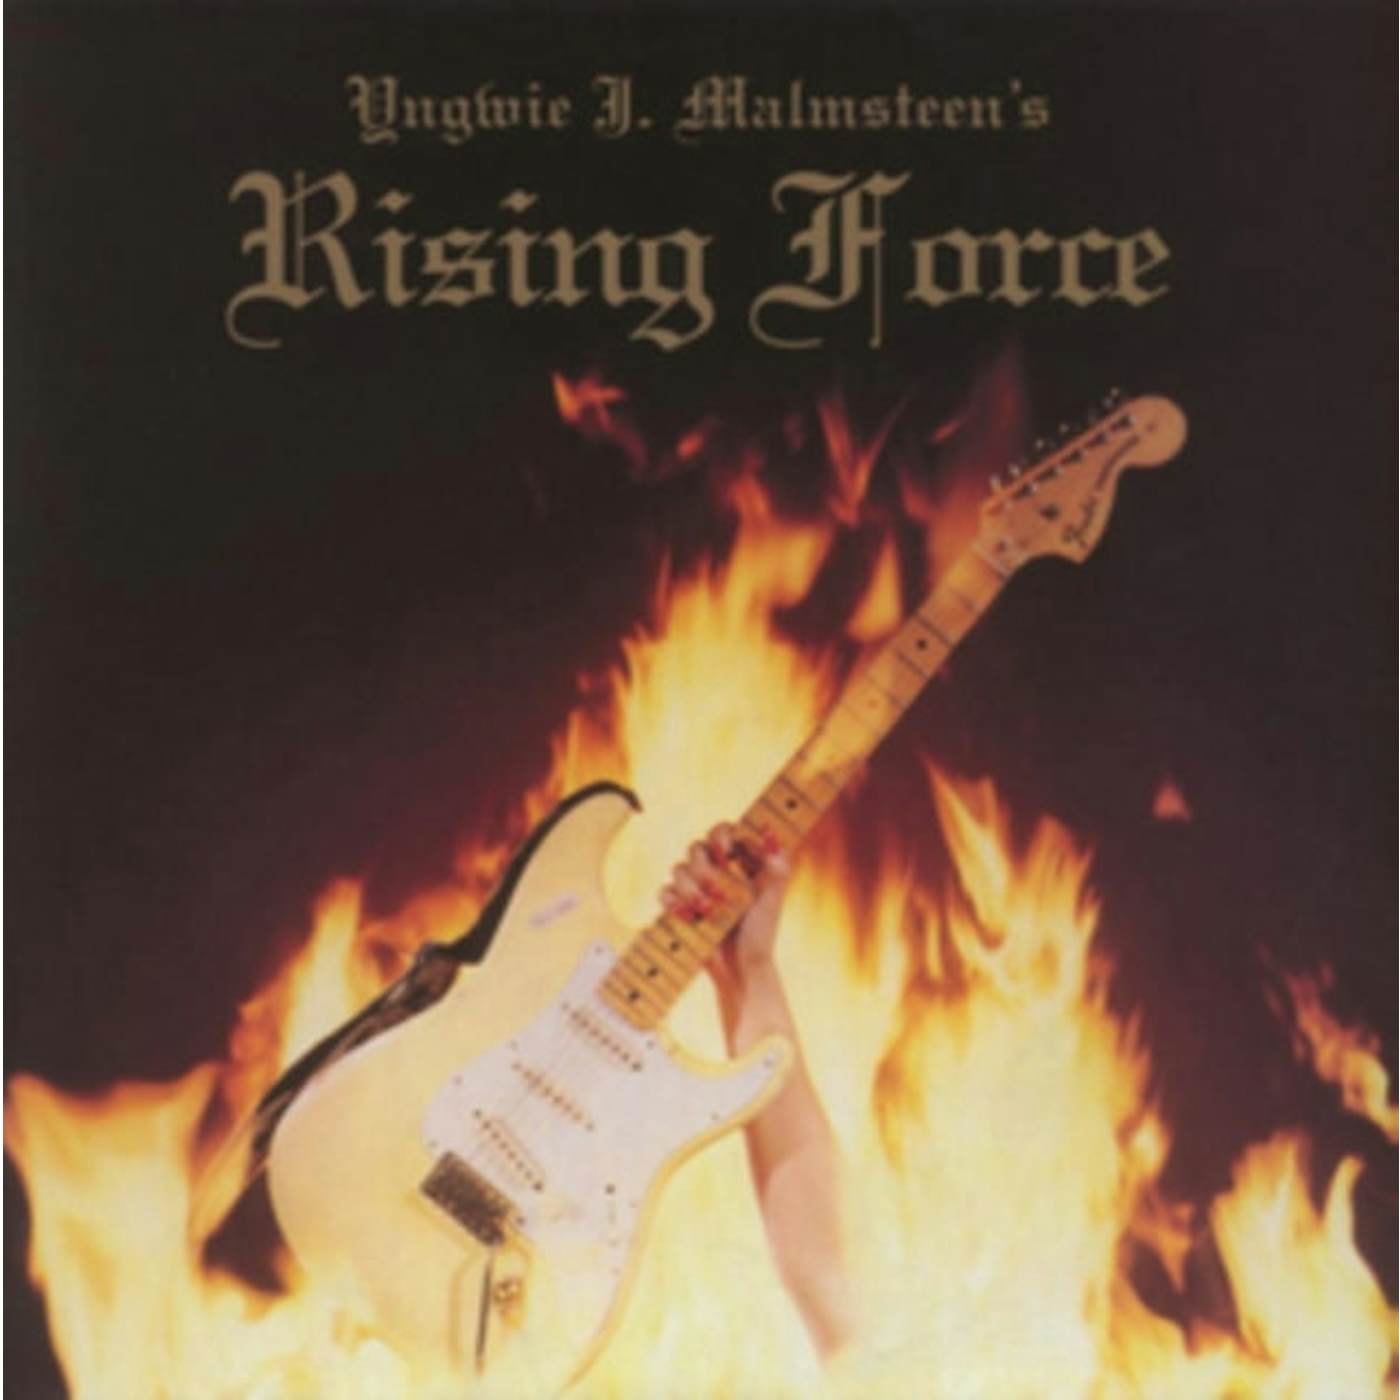 Yngwie Malmsteen LP - Rising Force (Vinyl)